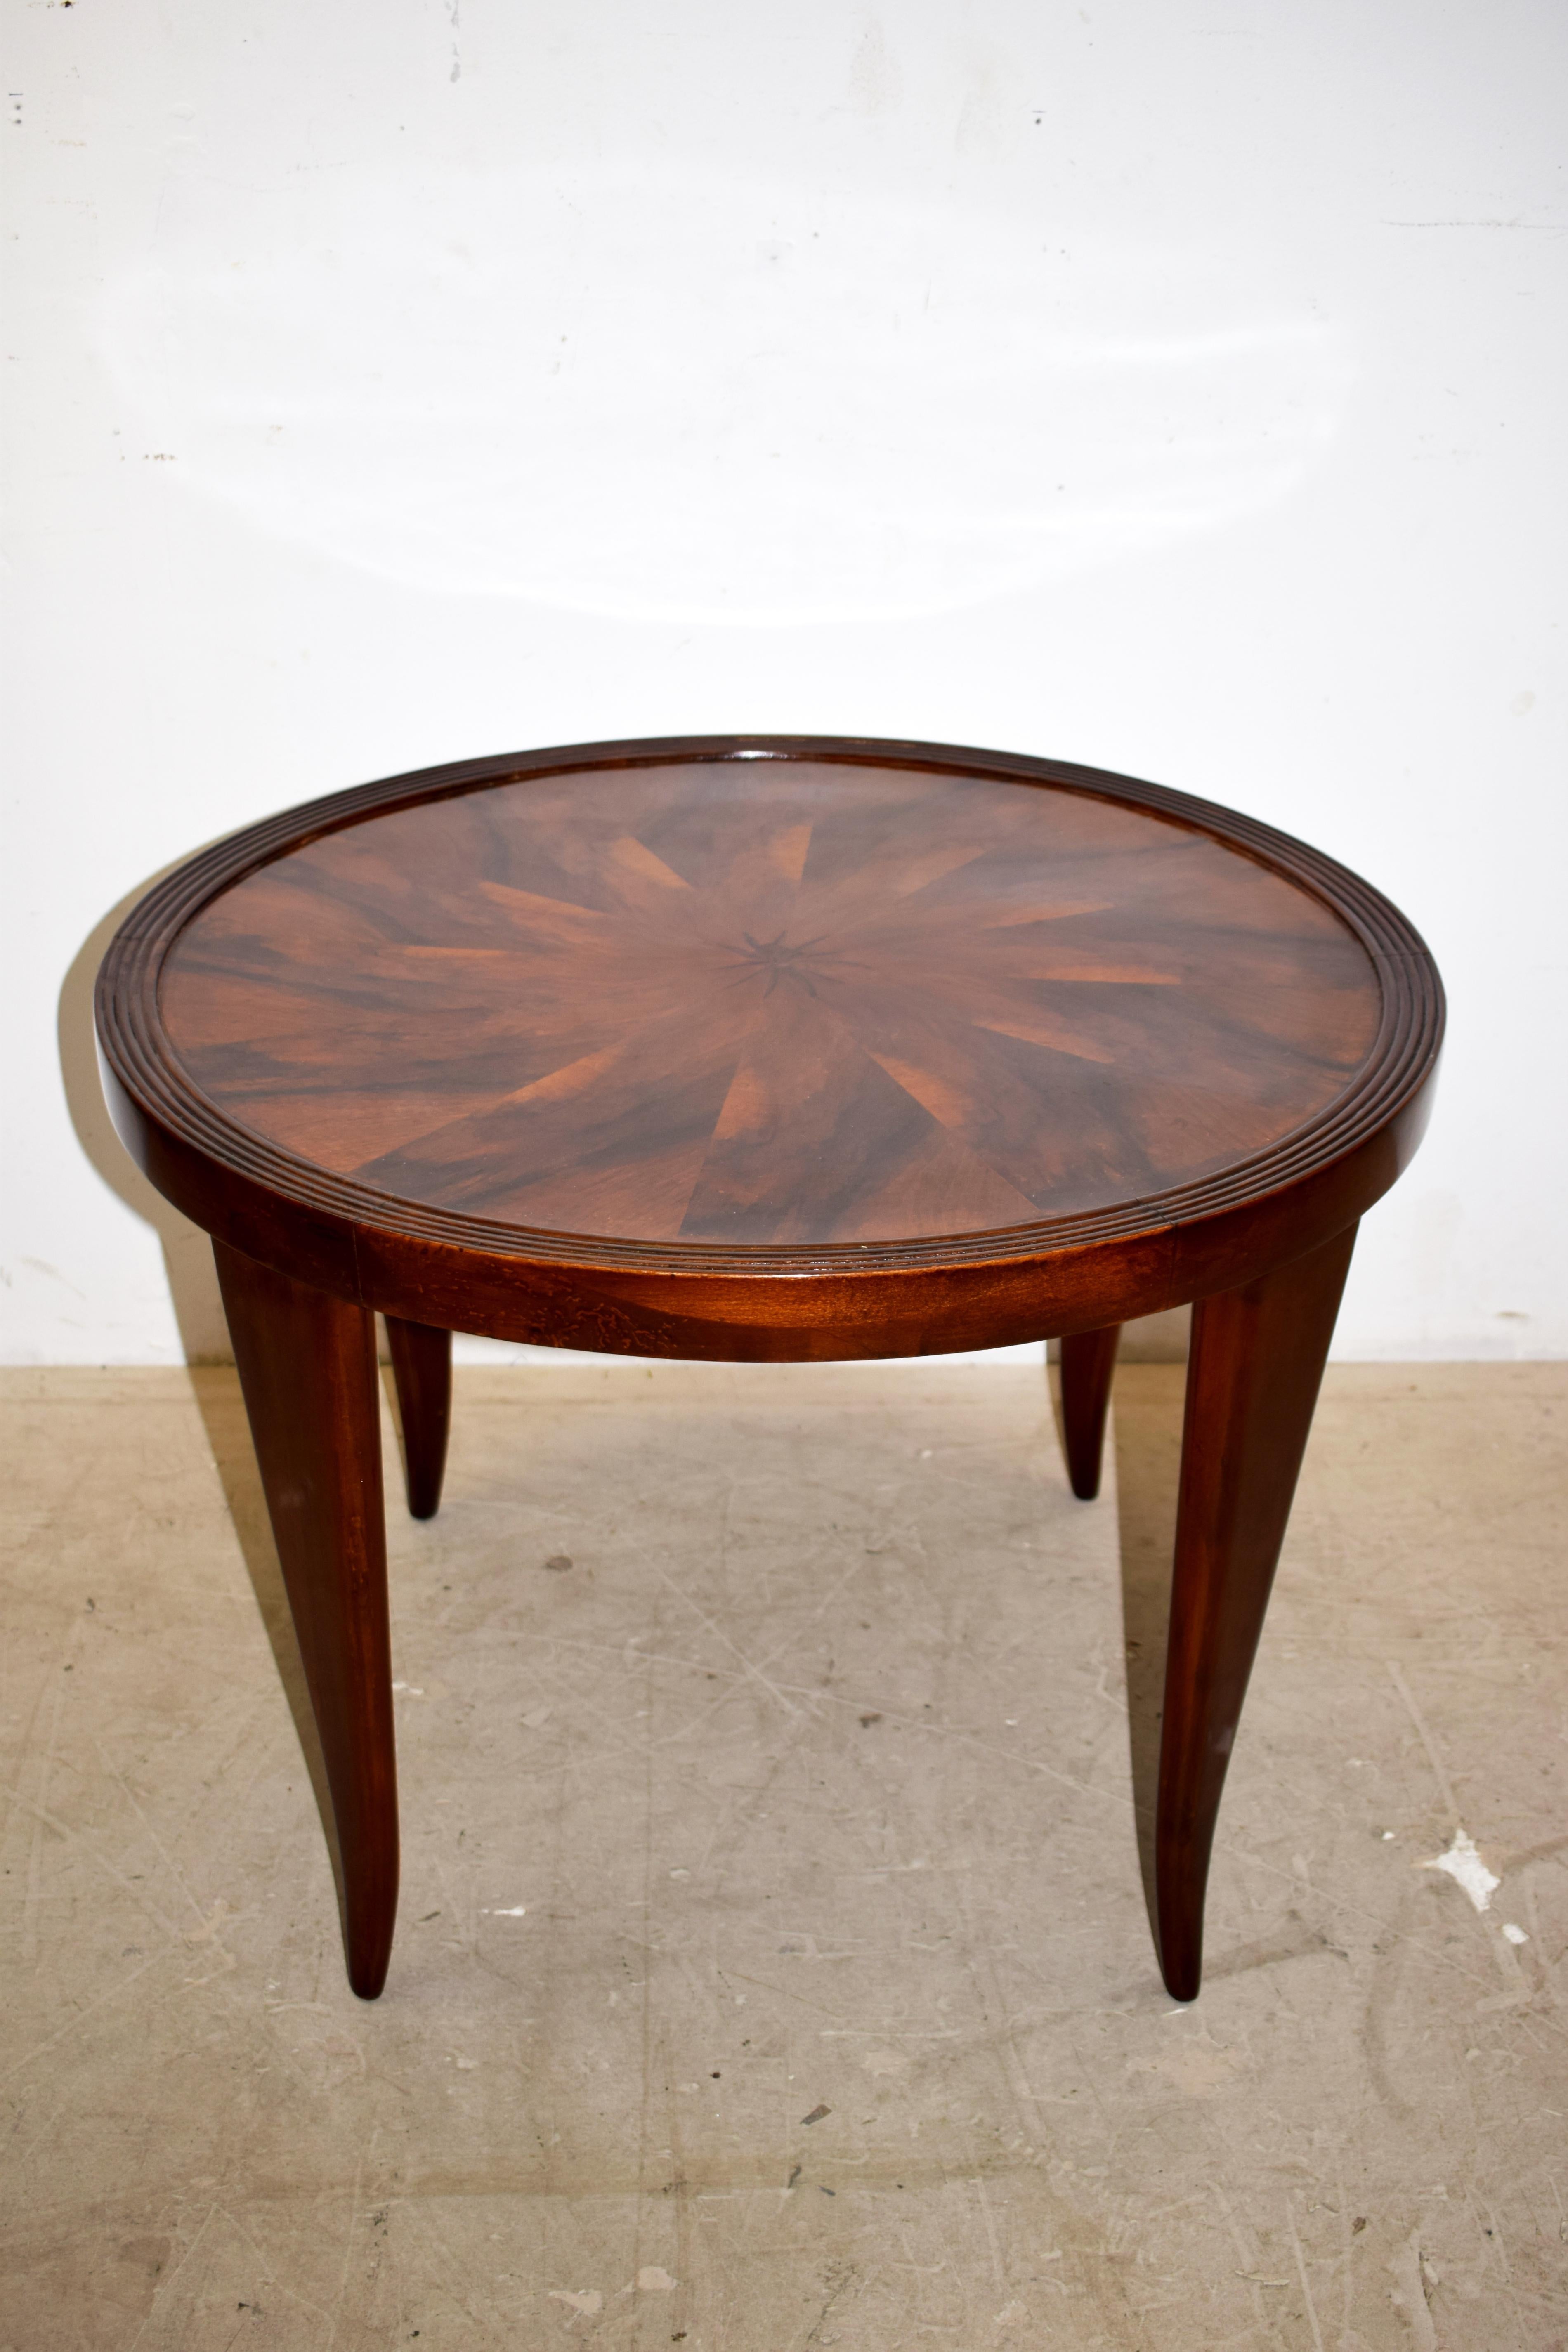 Italian round coffee table, 1940s.
Dimensions: H= 50 cm; D= 67 cm.